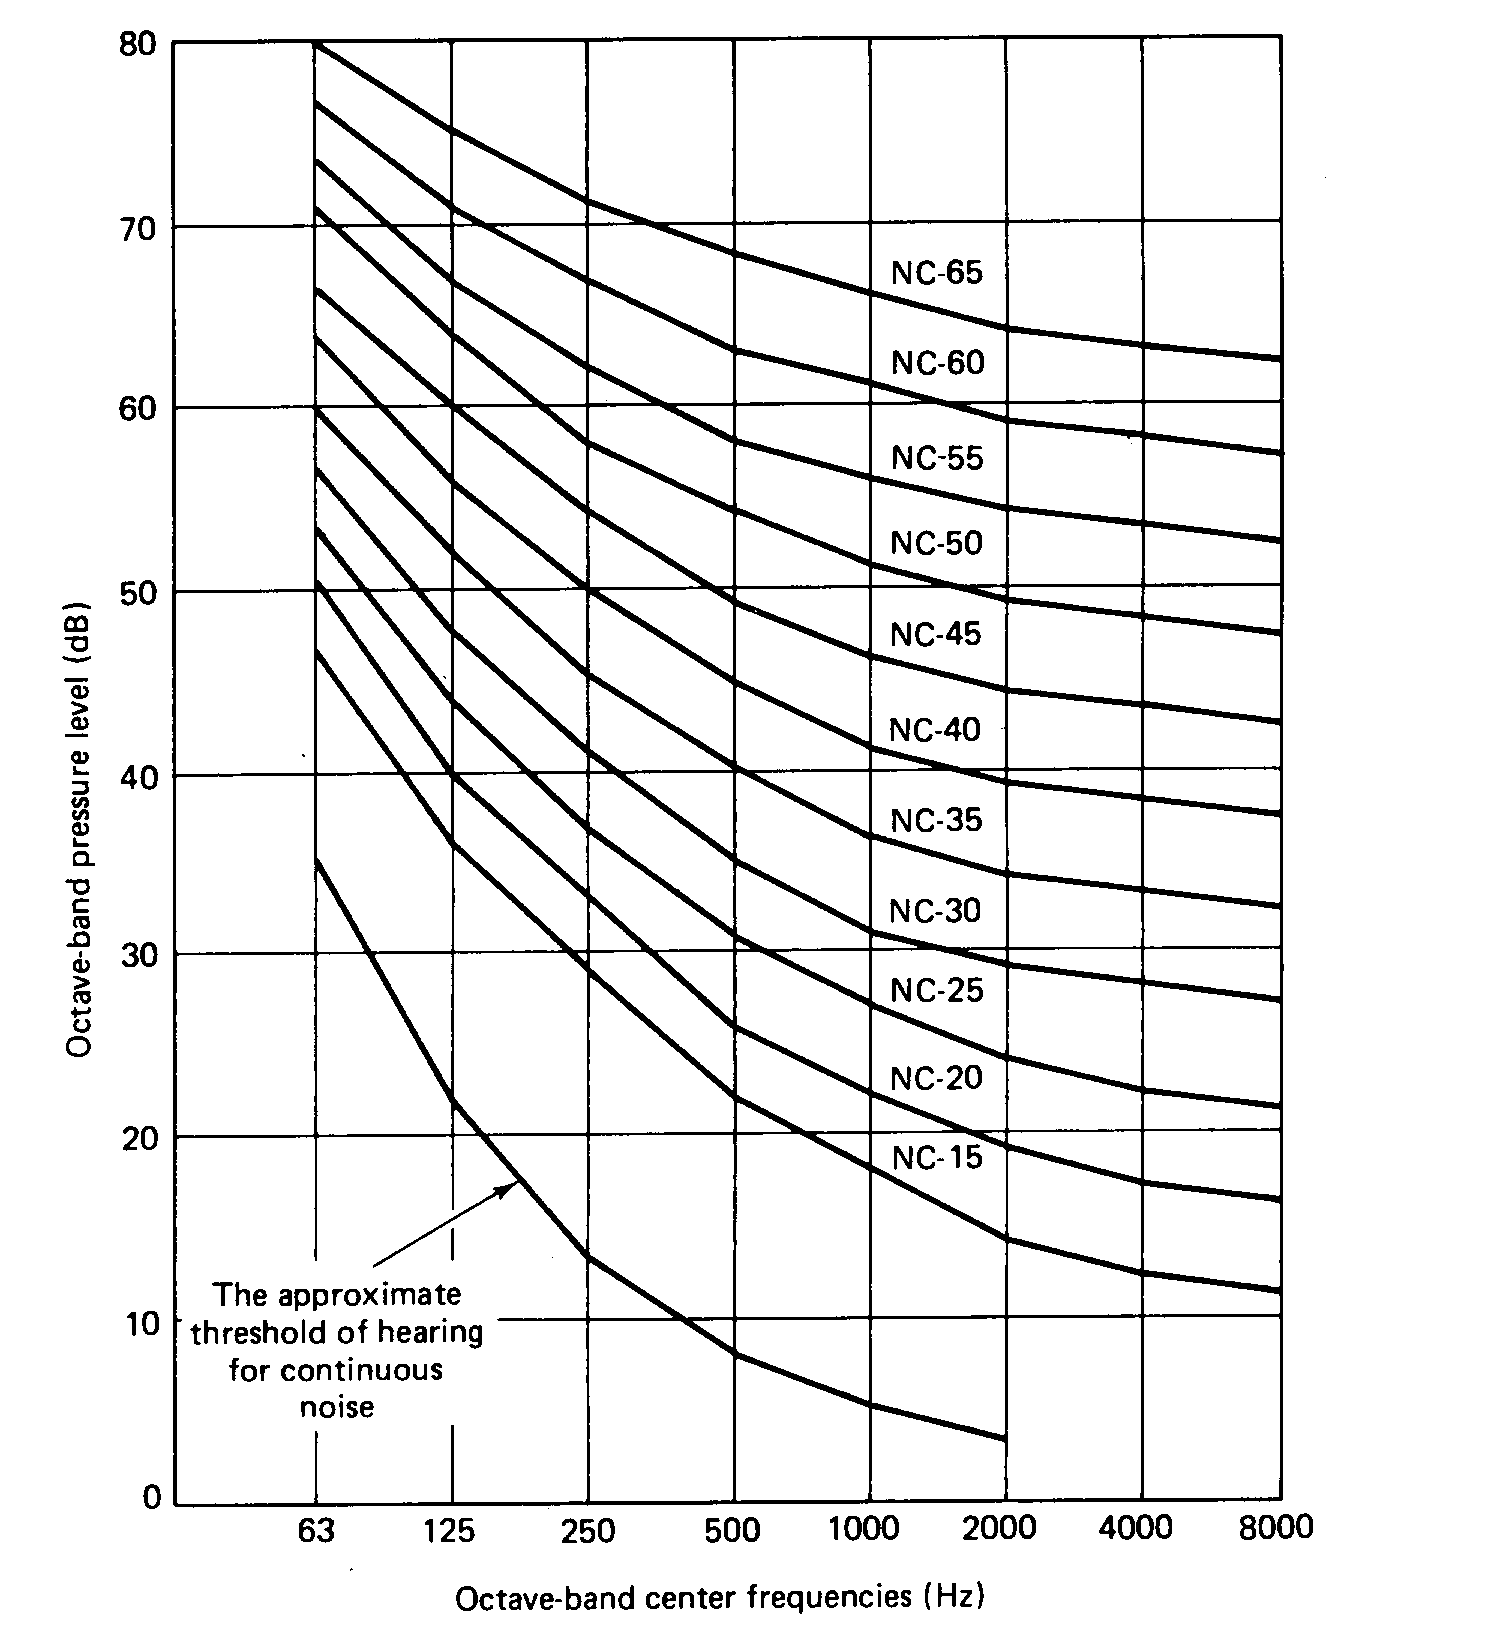 Noise Criteria Chart